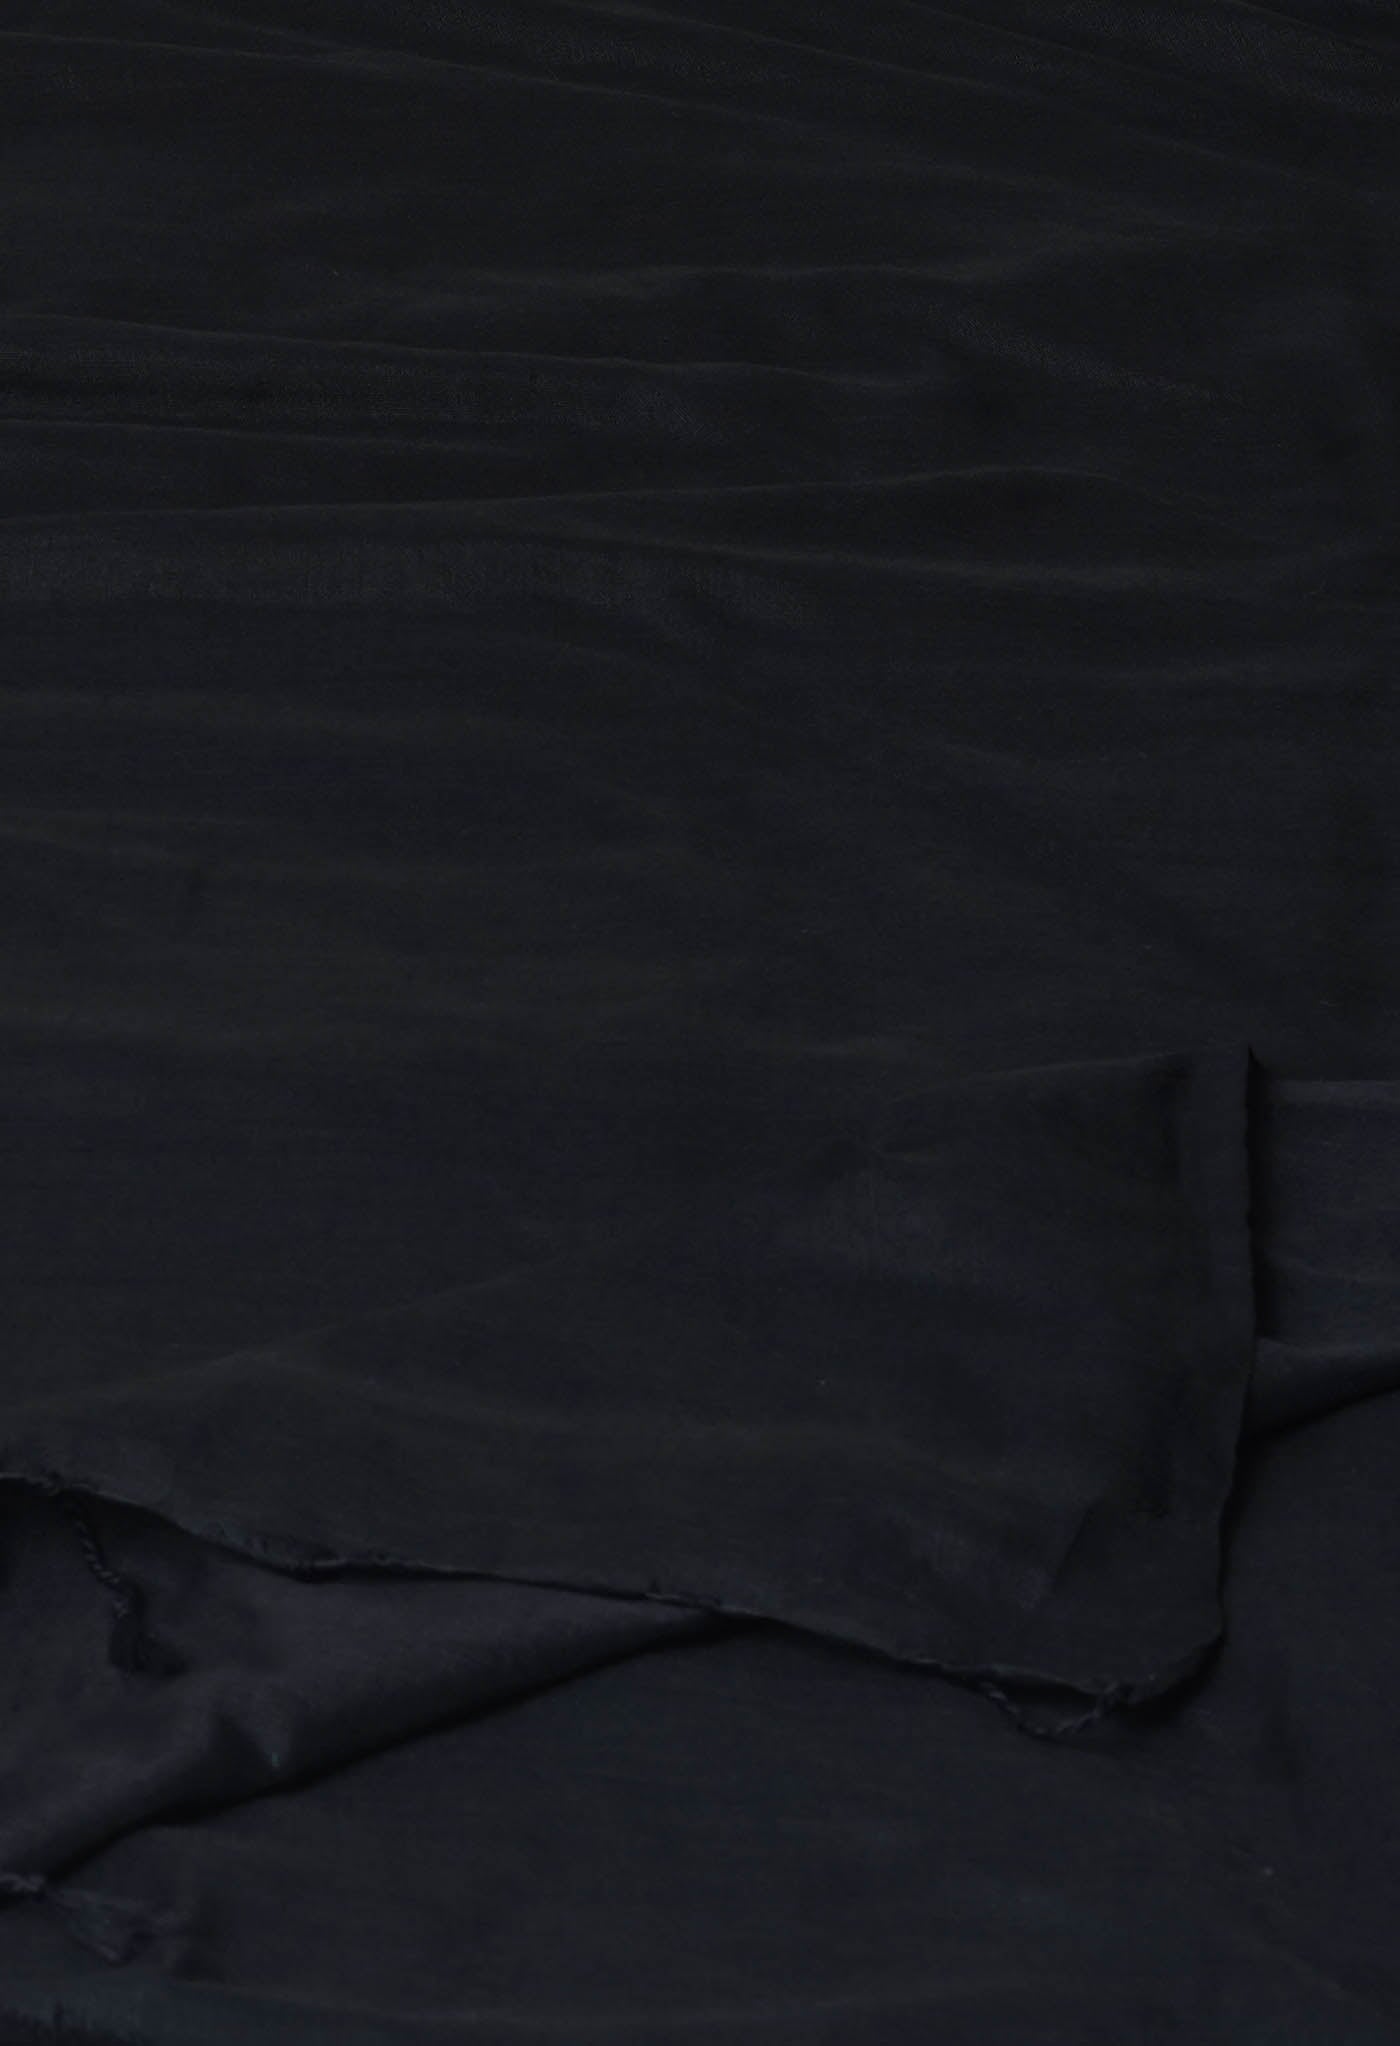 Black Pure Cross Weave Plain Cotton Linen Saree With Tassels